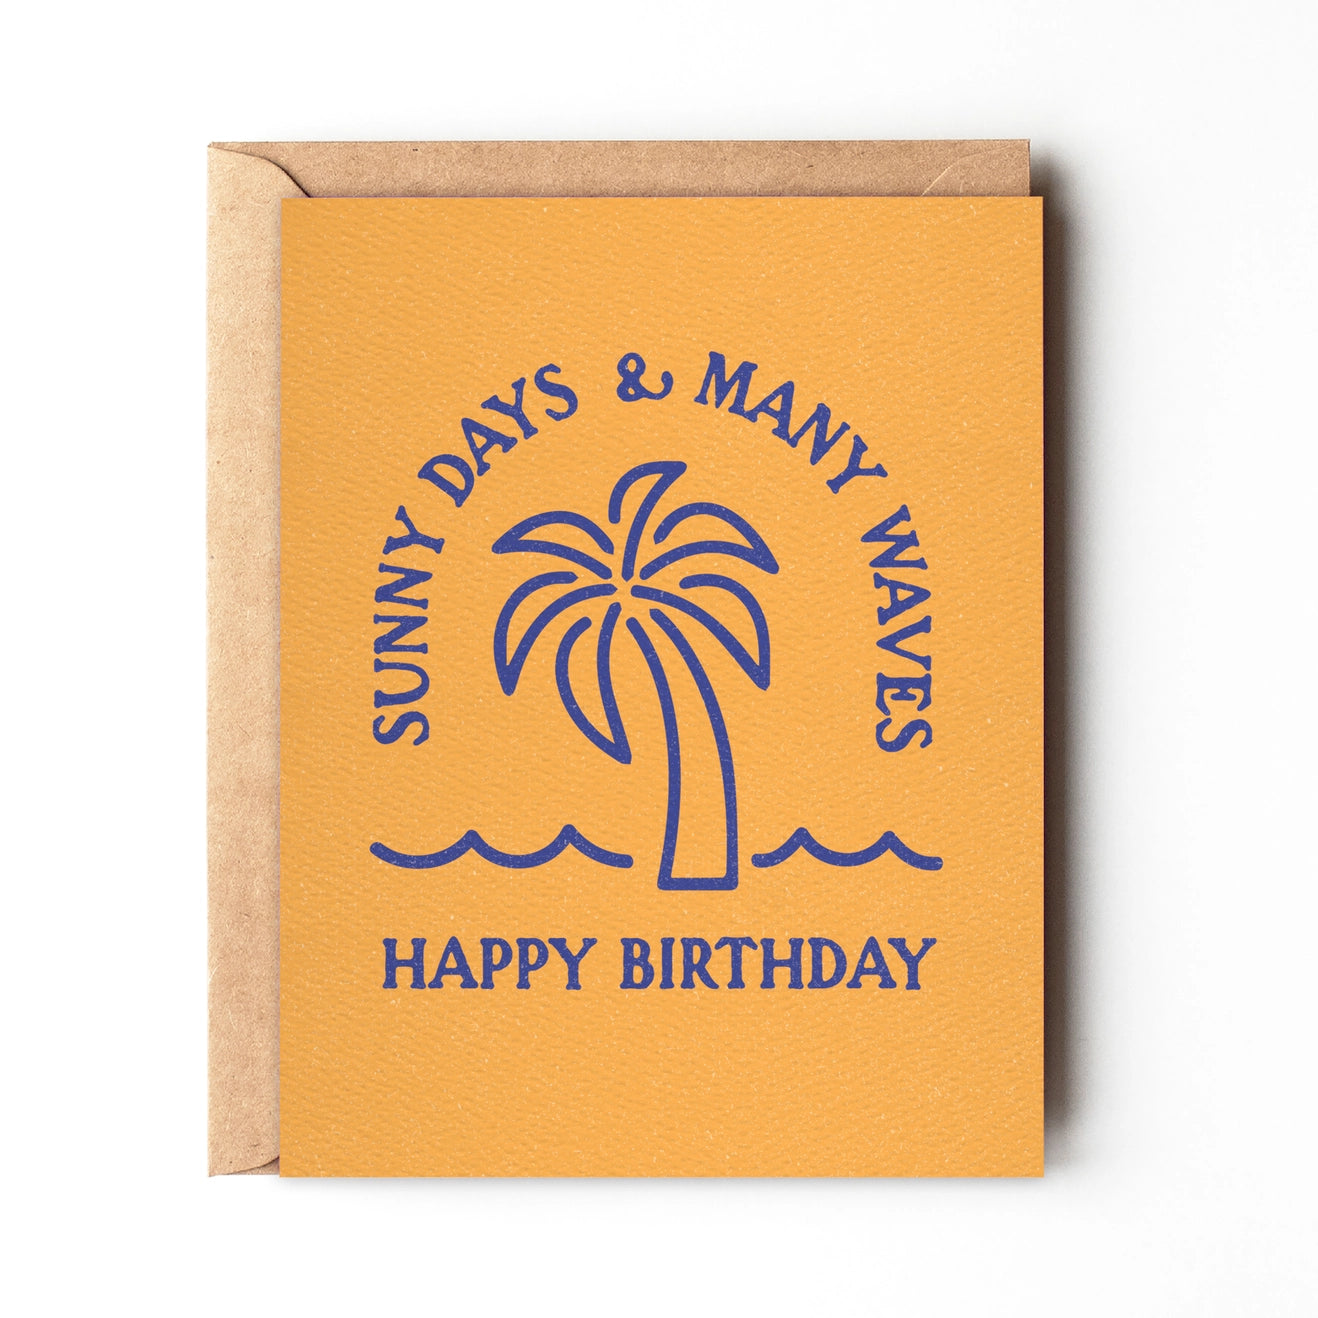 Sunny Days Many Waves - Greeting Card